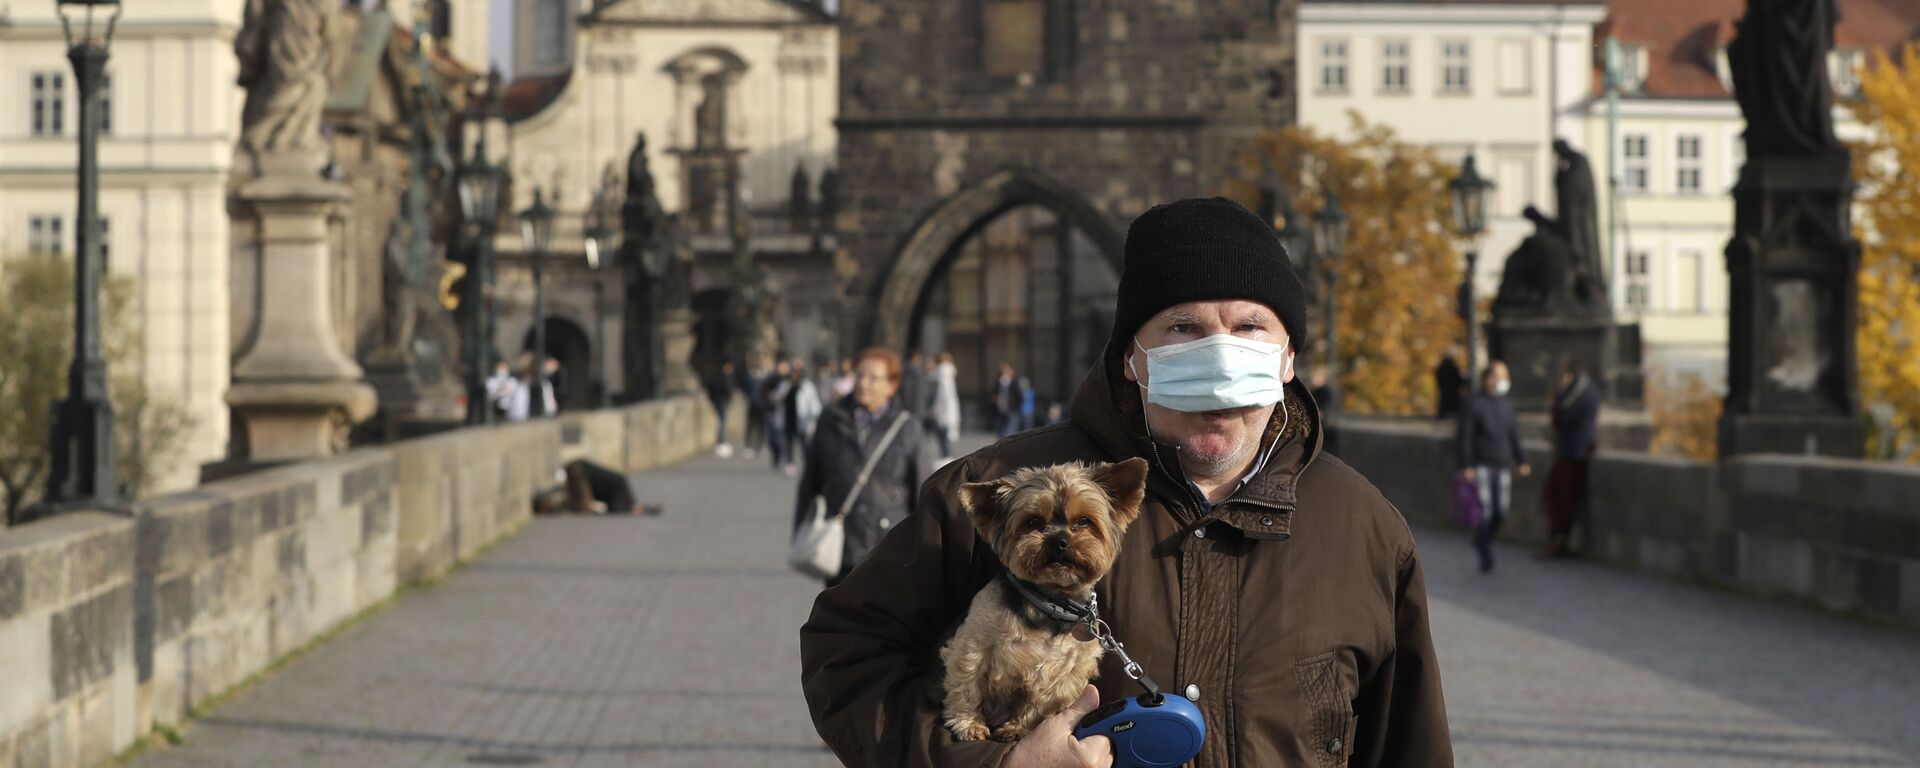 Пандемия коронавируса COVID 19 - мужчина в маске на Карловом мосту в Праге, Чехия - Sputnik Грузия, 1920, 21.03.2021